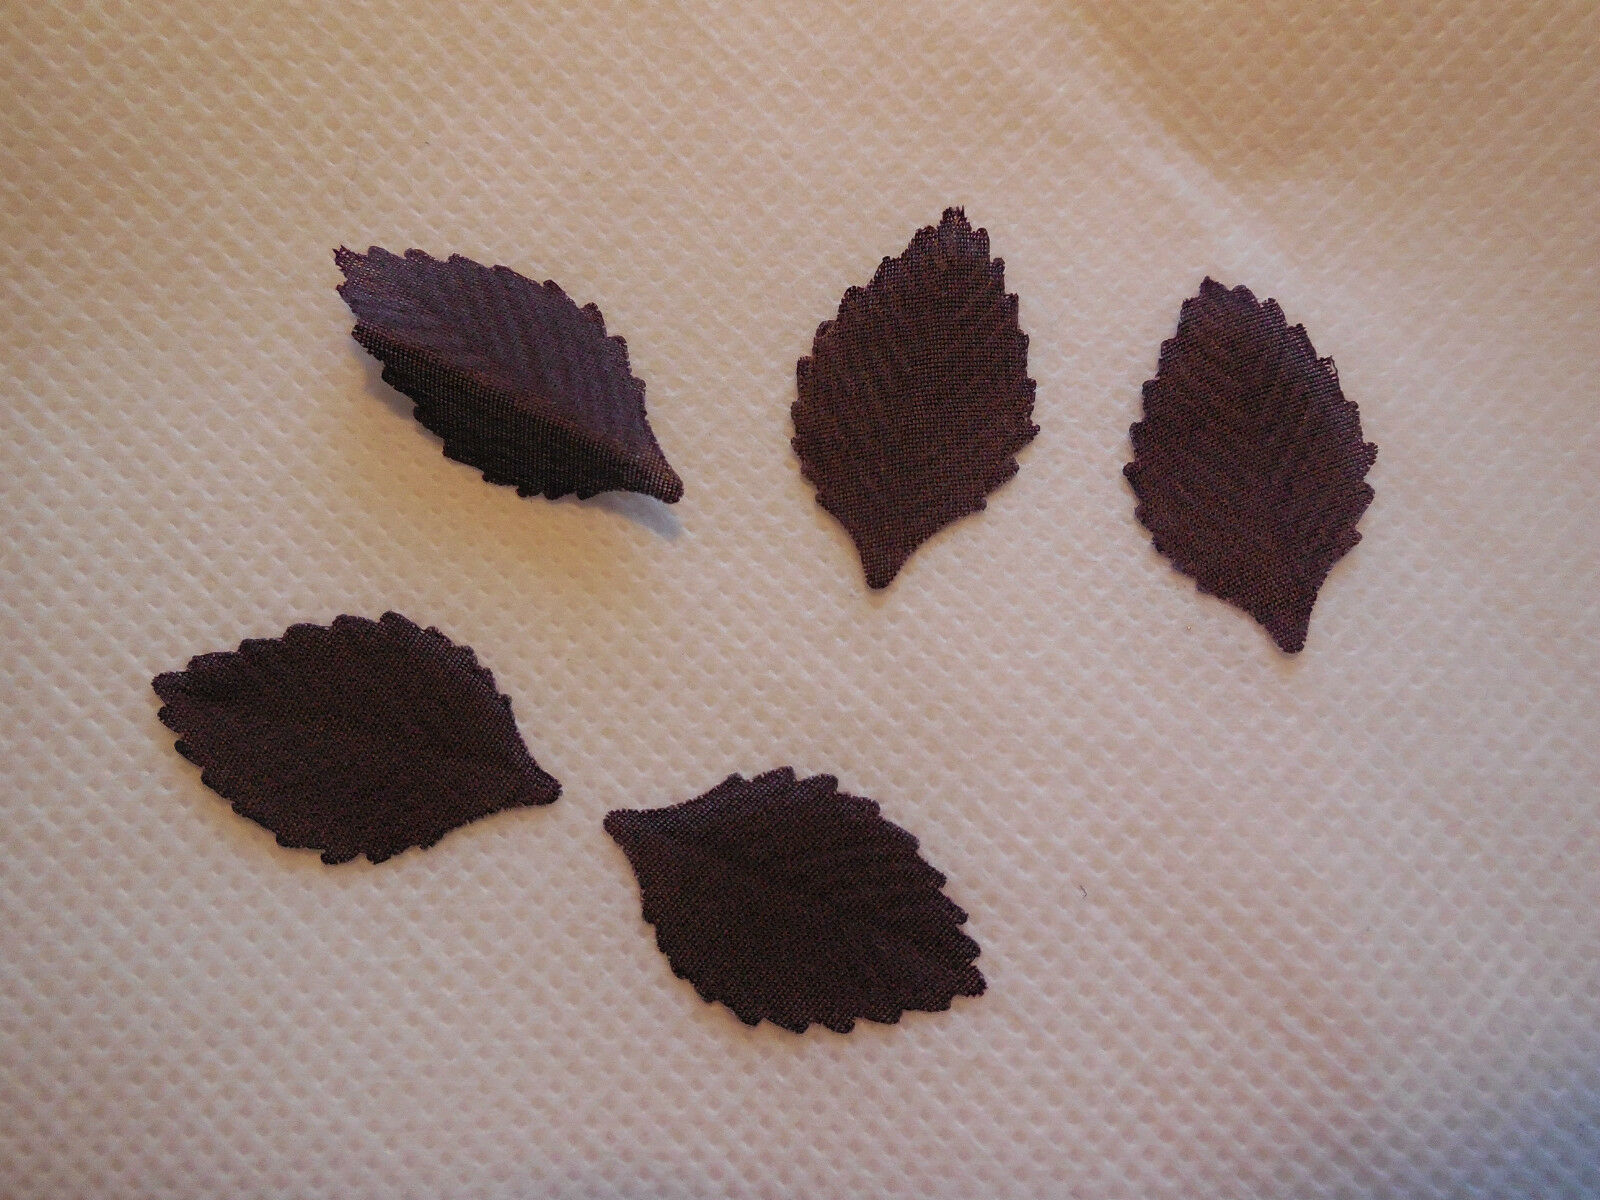 5 Pieces X Dark Purple Chiffon Leaves Craft Fabric Leaves 2.8 X1.6cm Uk Seller